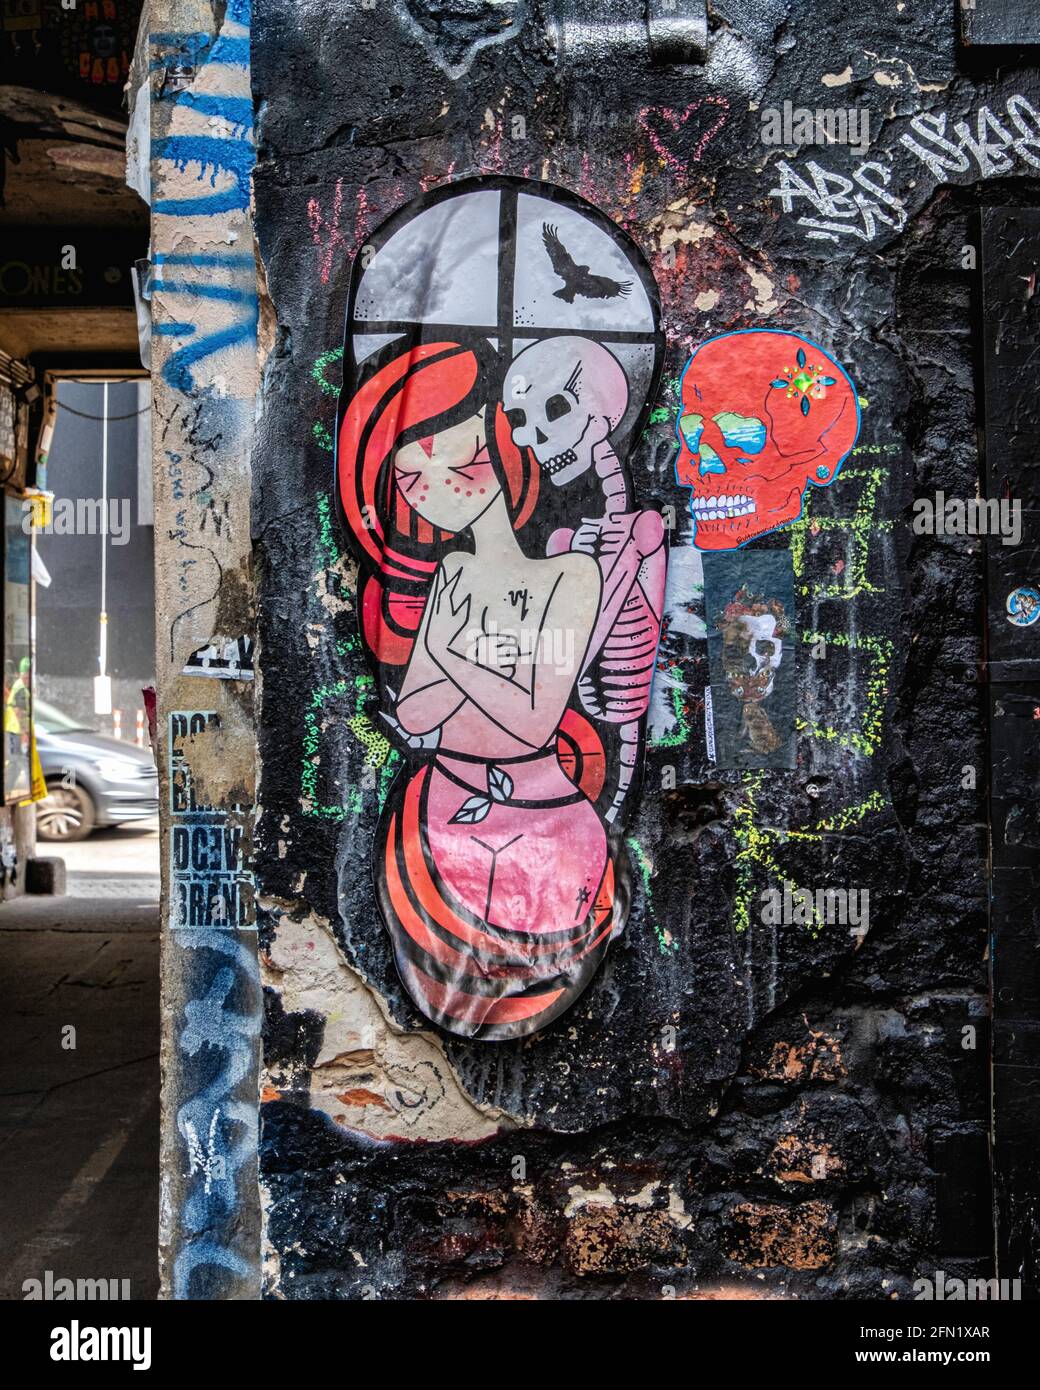 Street art & graffiti on dilapidated wall of Haus Schwarzenberg art & culture venue, 39 Rosenthaler Strasse, Mitte, Berlin,Germany. Woman & skulls Stock Photo